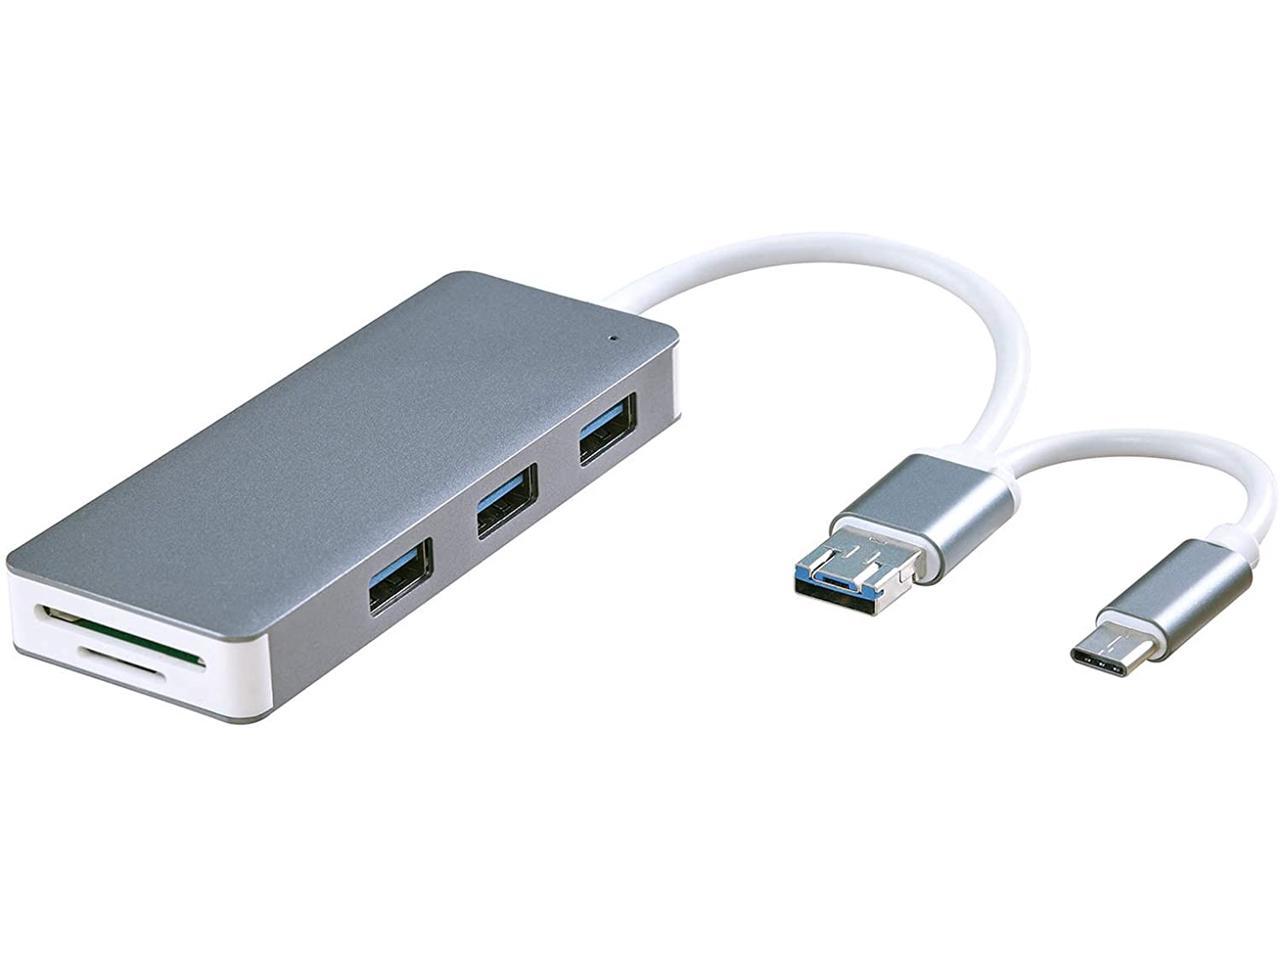 ZLDGYG SMDMM USB HUB & USB C HUB to Multi USB3.0 USB 3.0 Splitter for MacBook Pro Air Laptop Computer 4 Port Multiple USB Type C HUB Color : White-USB